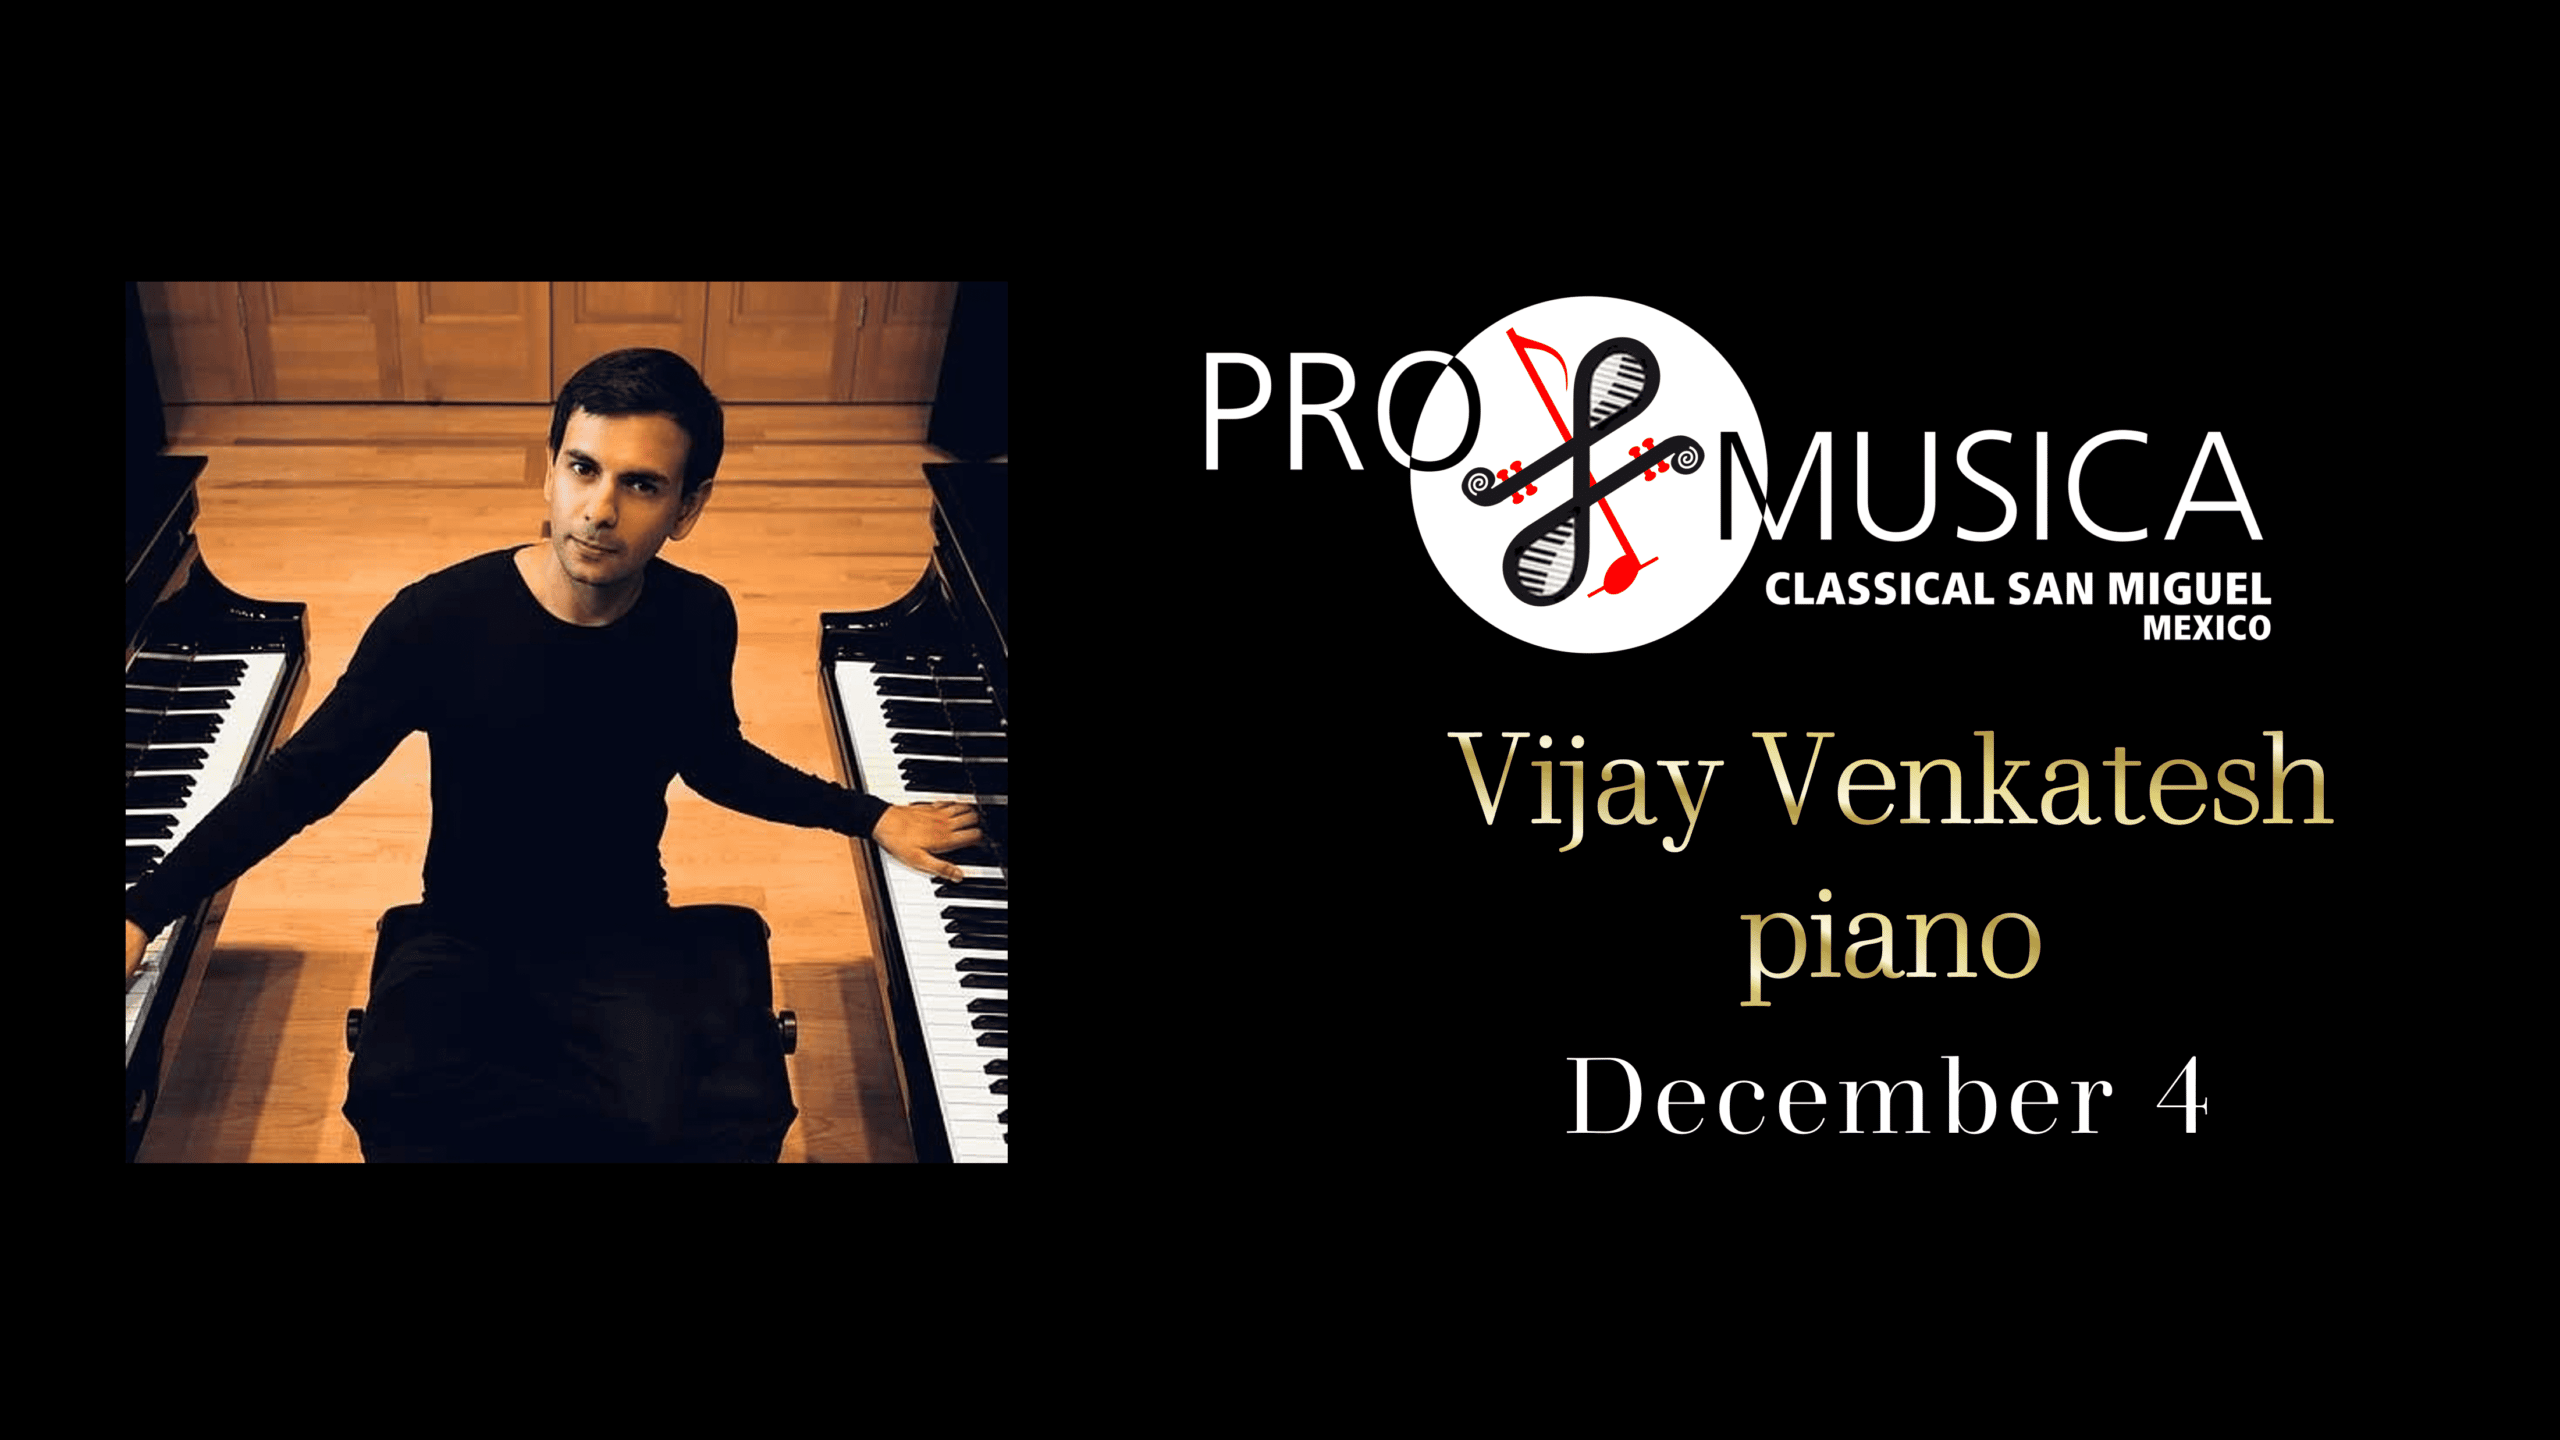 Pro Musica Presents: Vijay Venkatesh, piano.